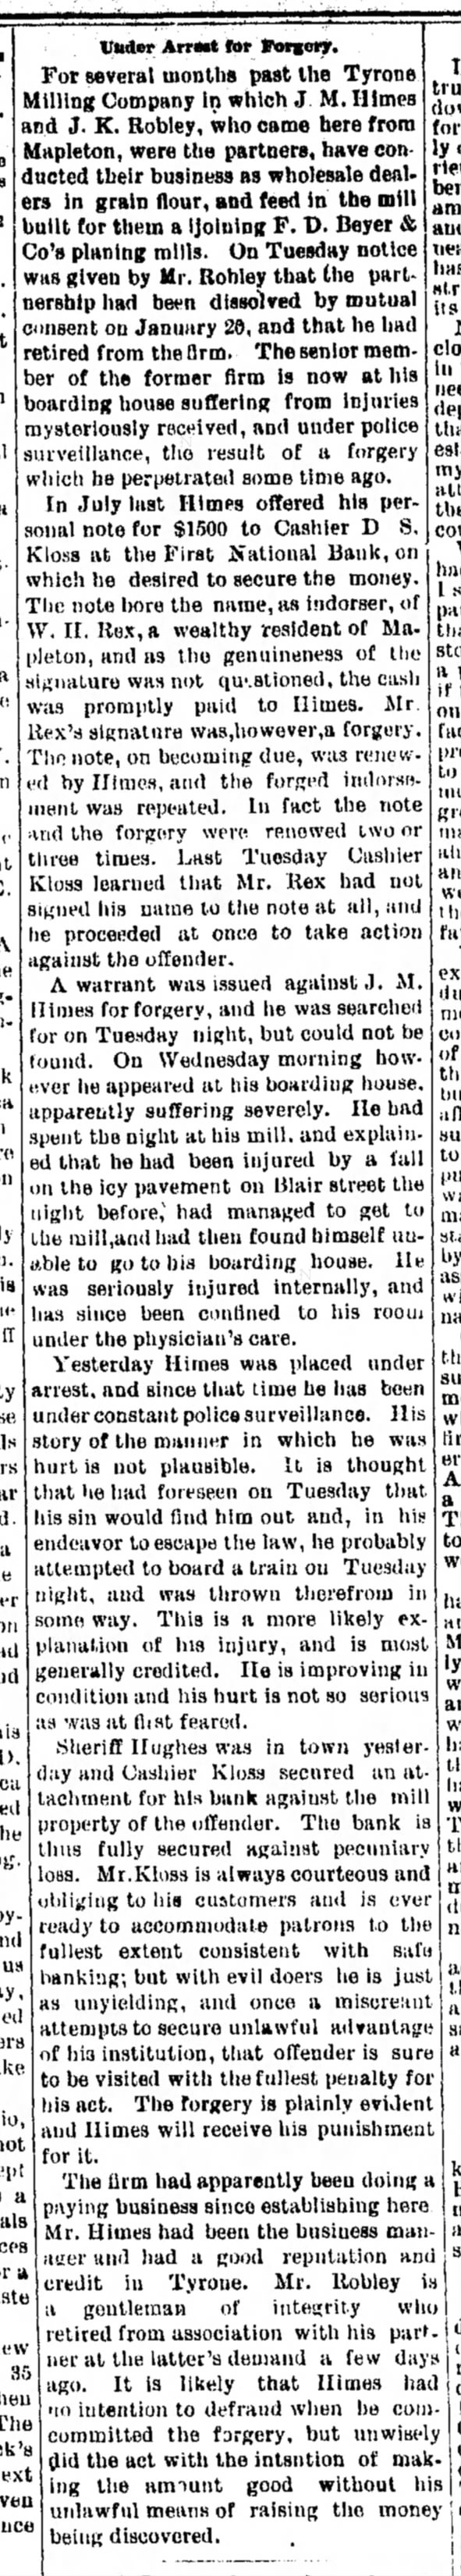 John K. Robley-mill-Tyrone Daily Herald-p.4-28 Jan 1892